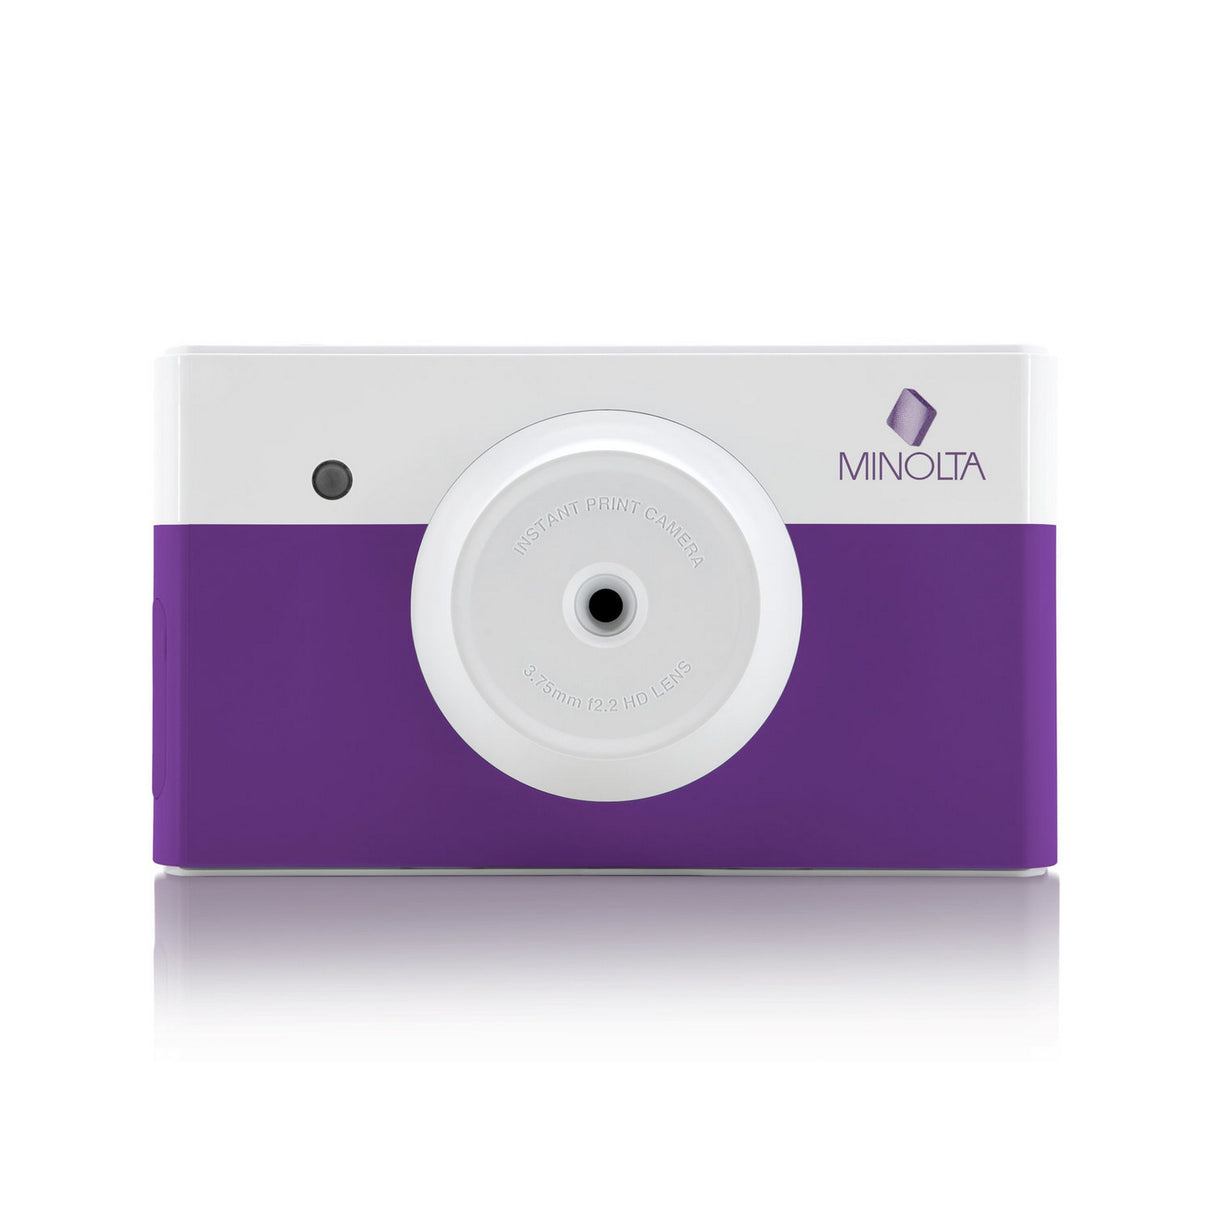 Minolta Instant Print Digital Camera, Purple